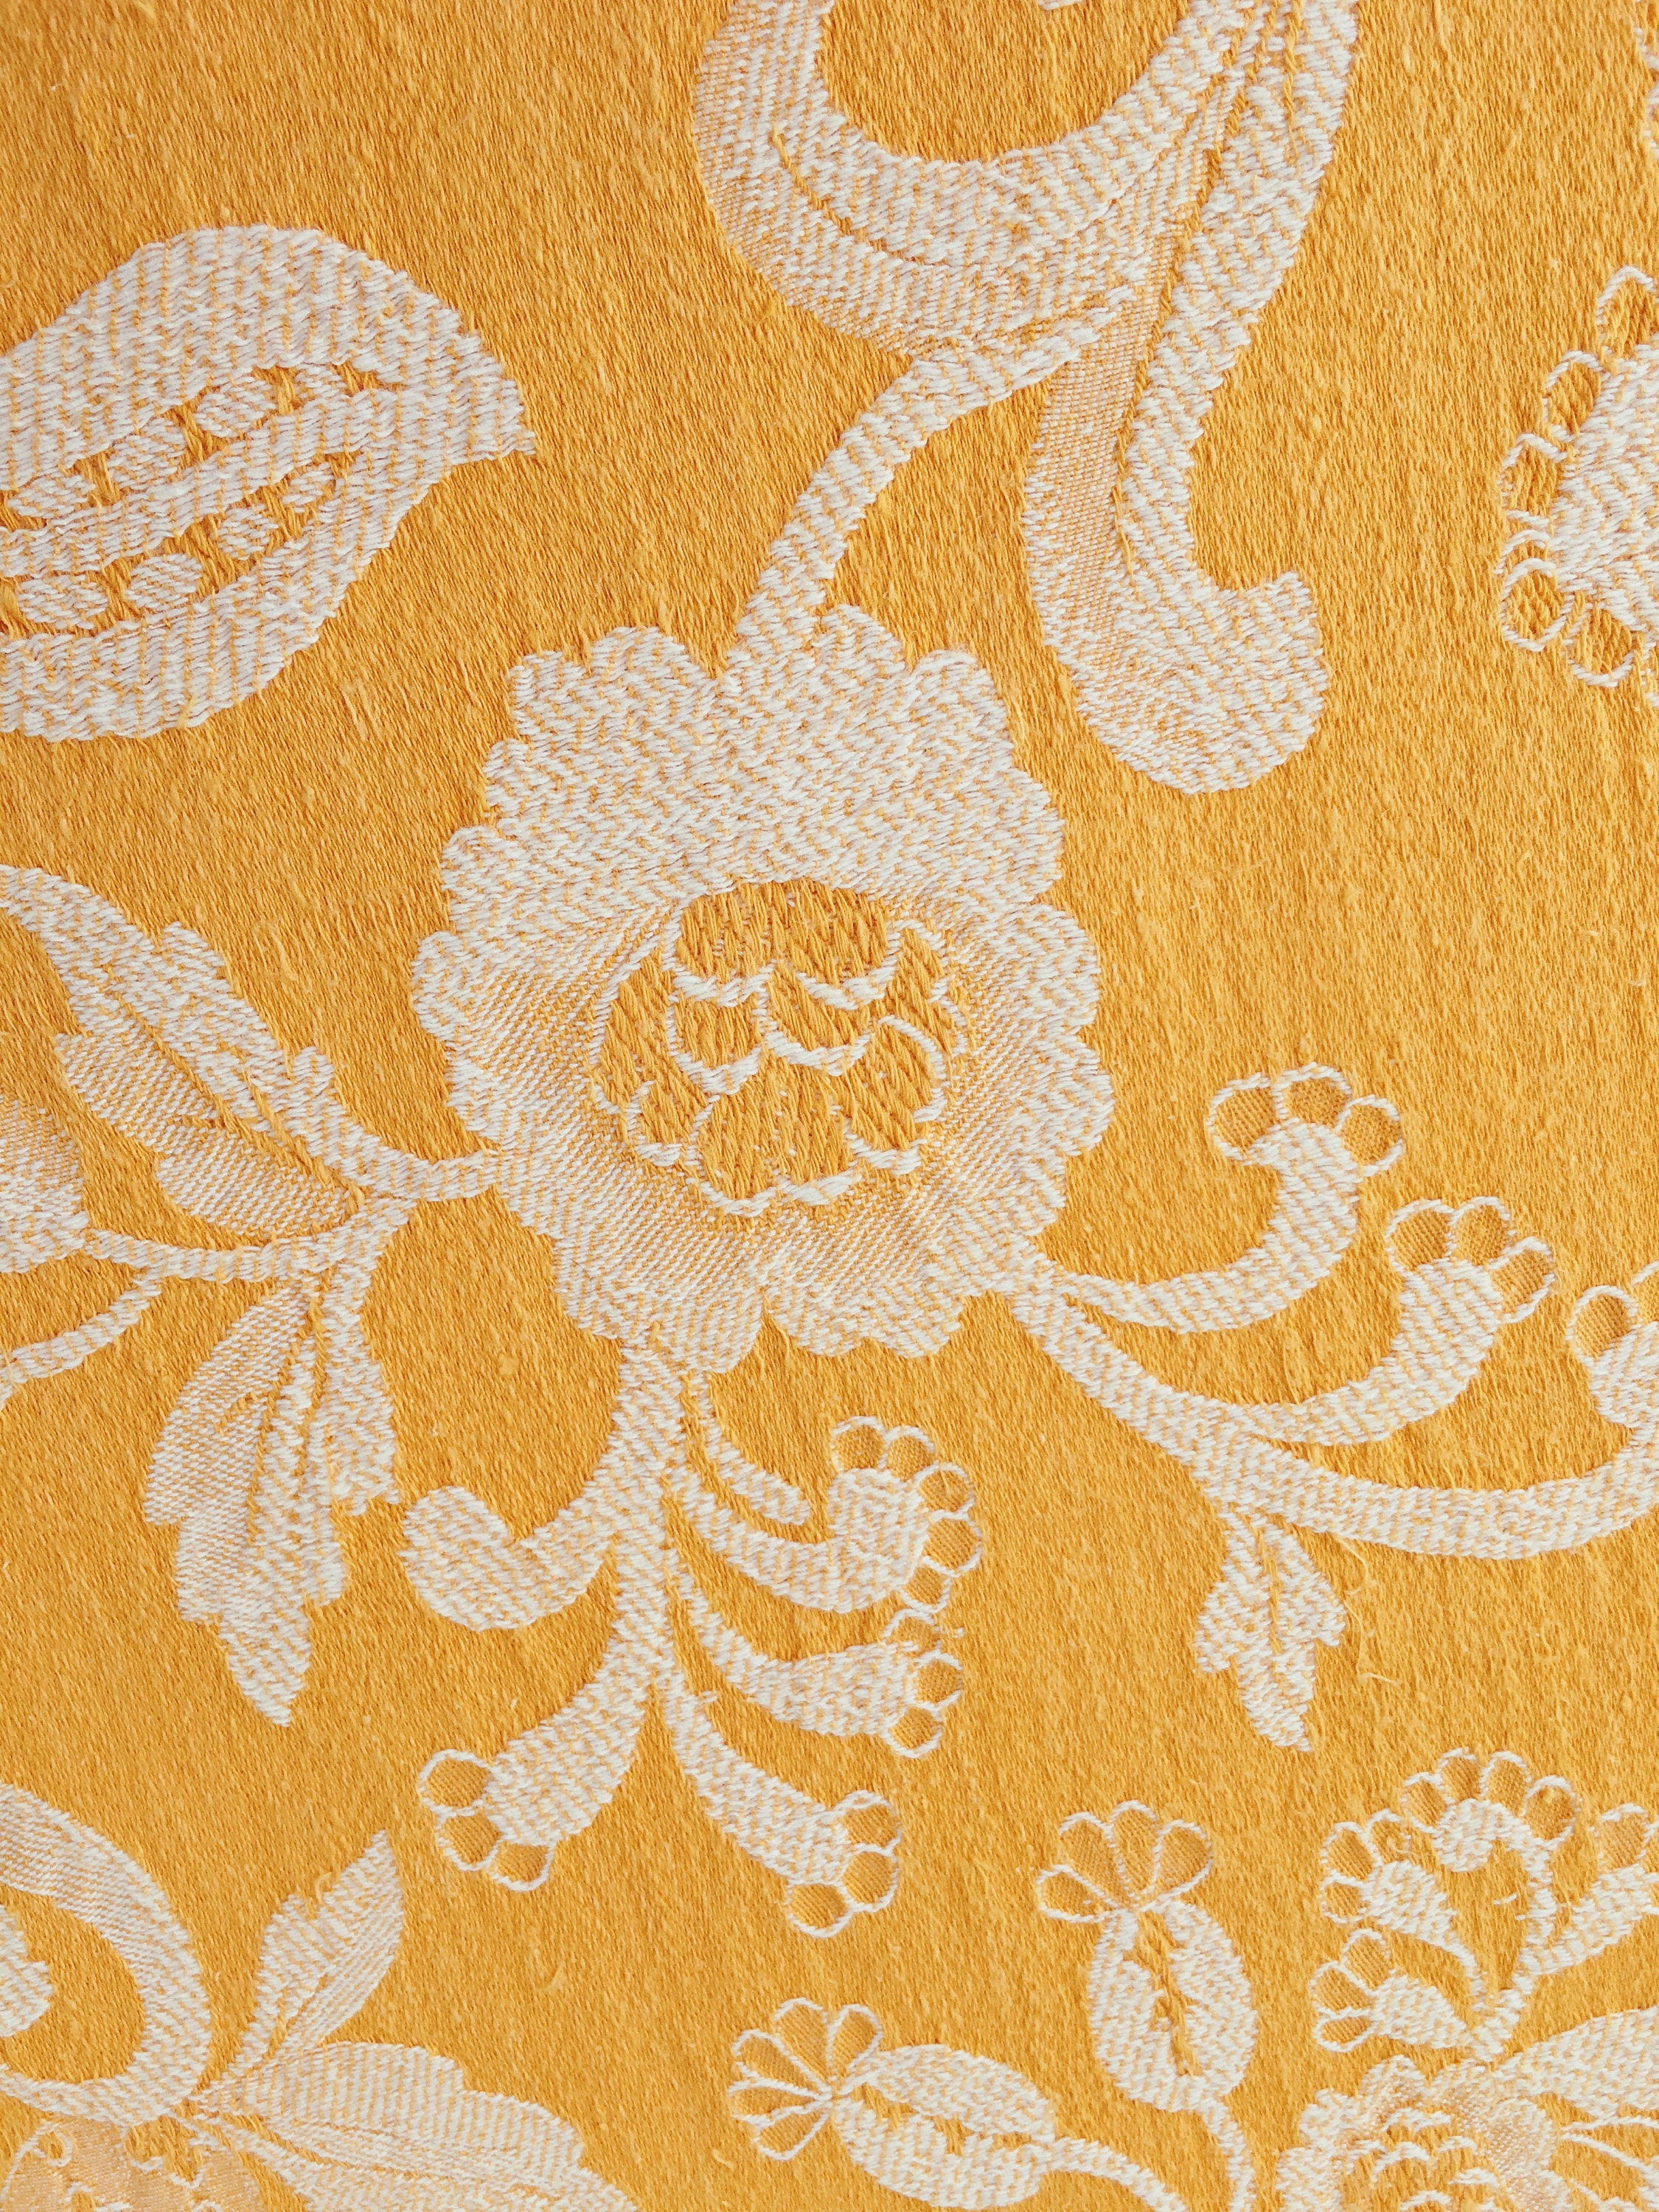 Yellow Antique Fabric Ticking Fabric 1930-1950 Mattress | Etsy